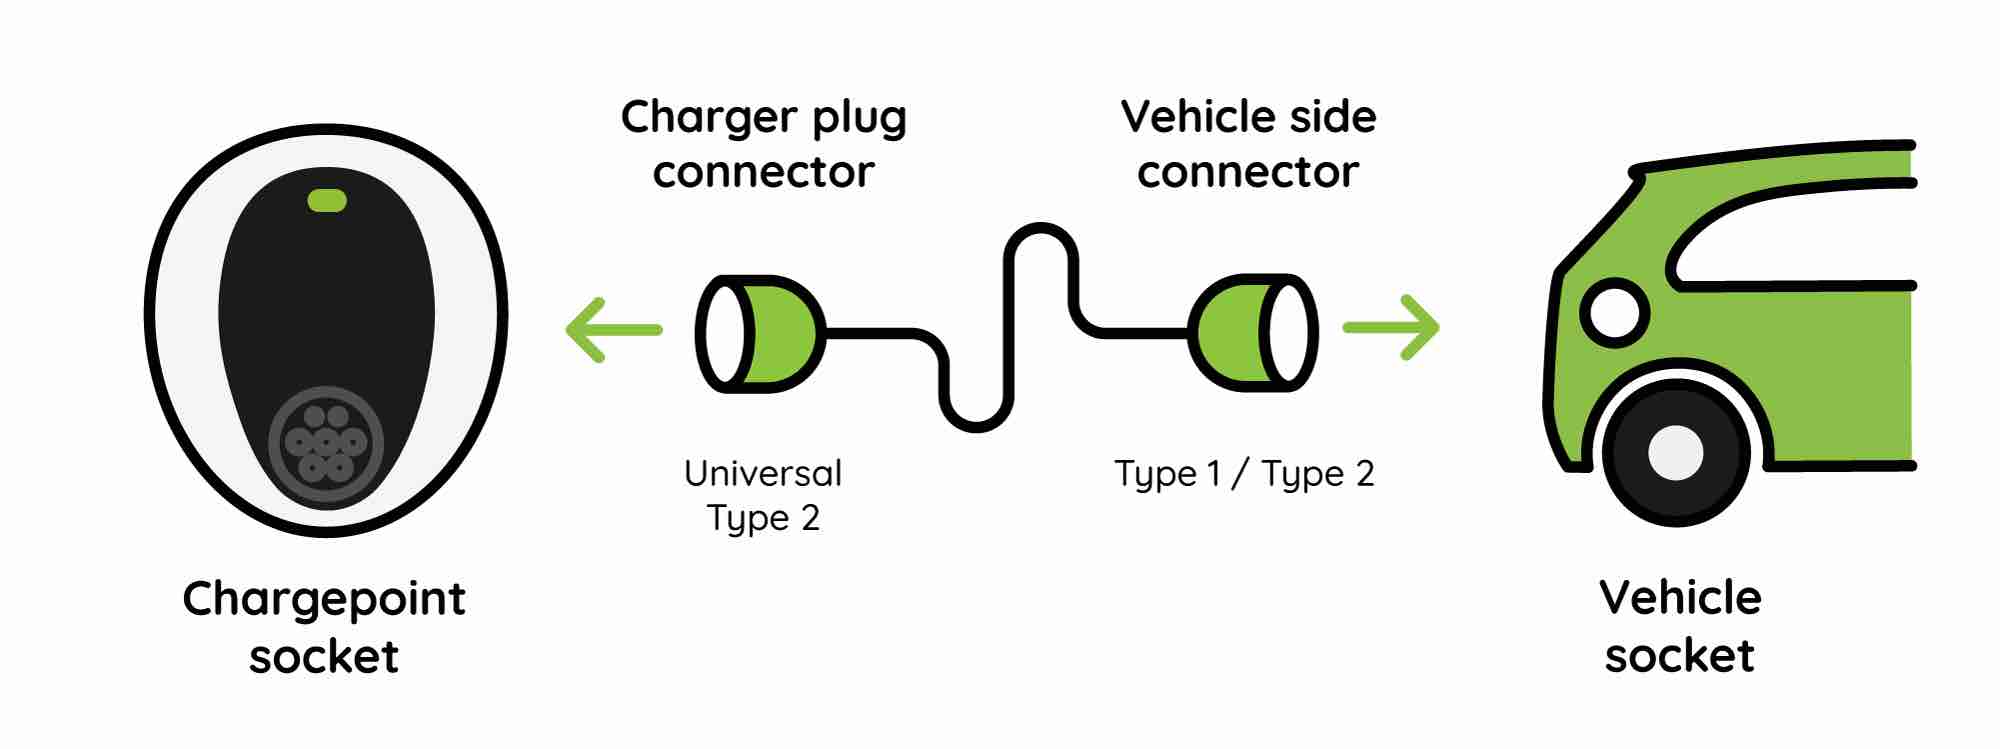 Type 1 EV charging connectors